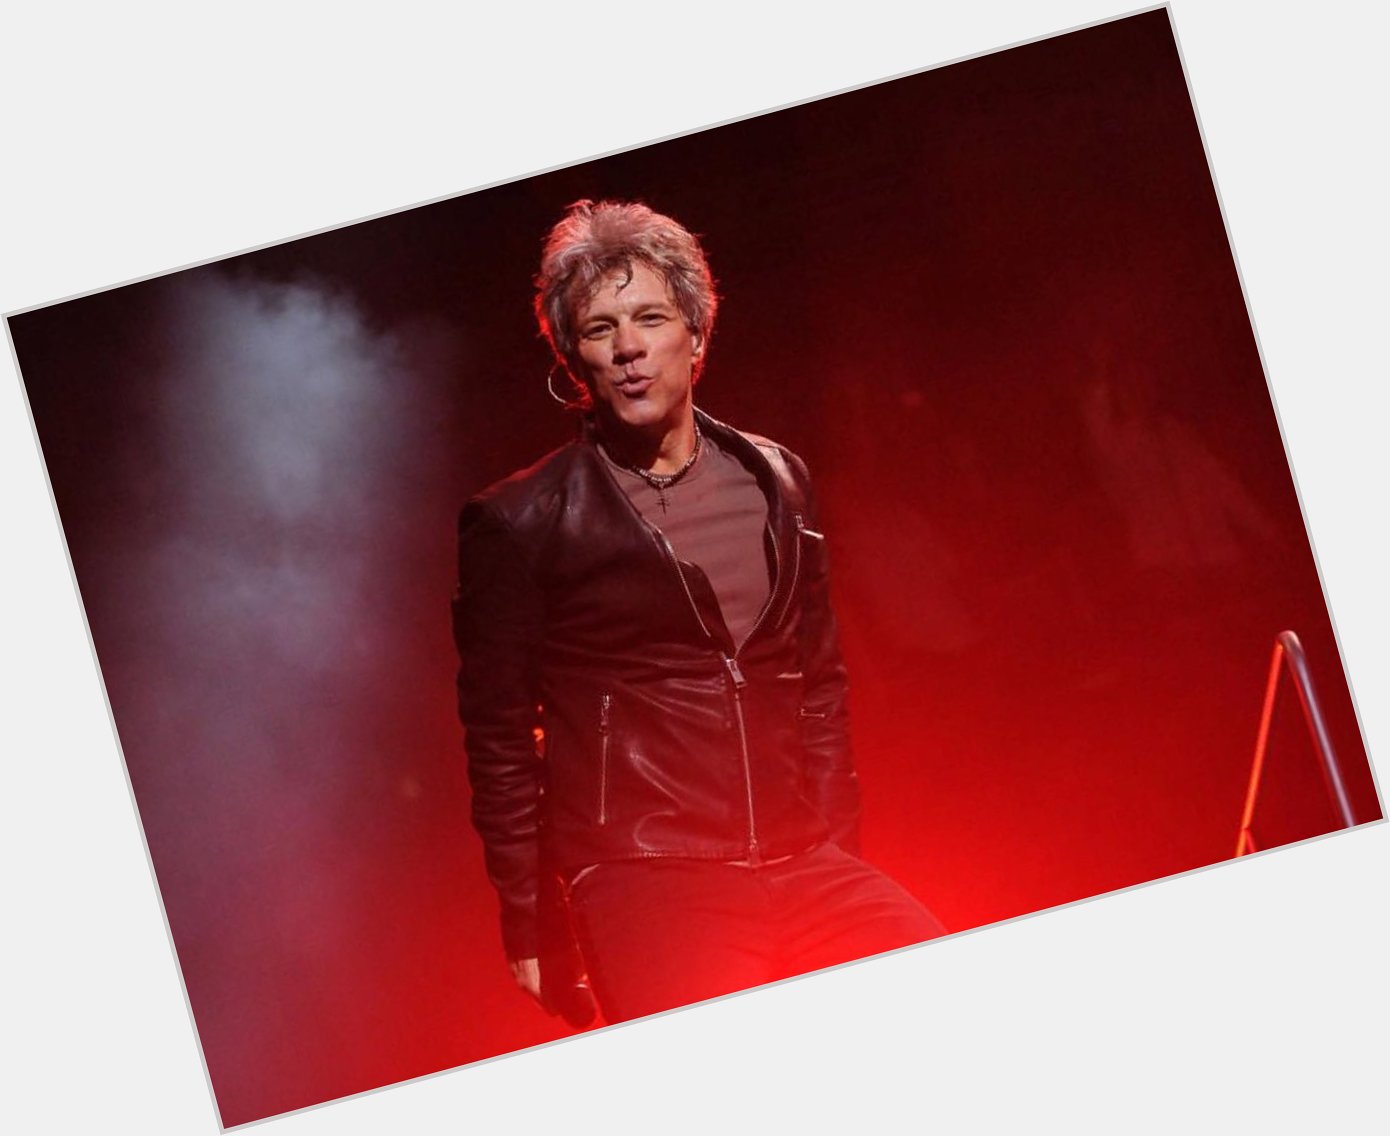 Happy Birthday Jon Bon Jovi! What s your favorite song?  